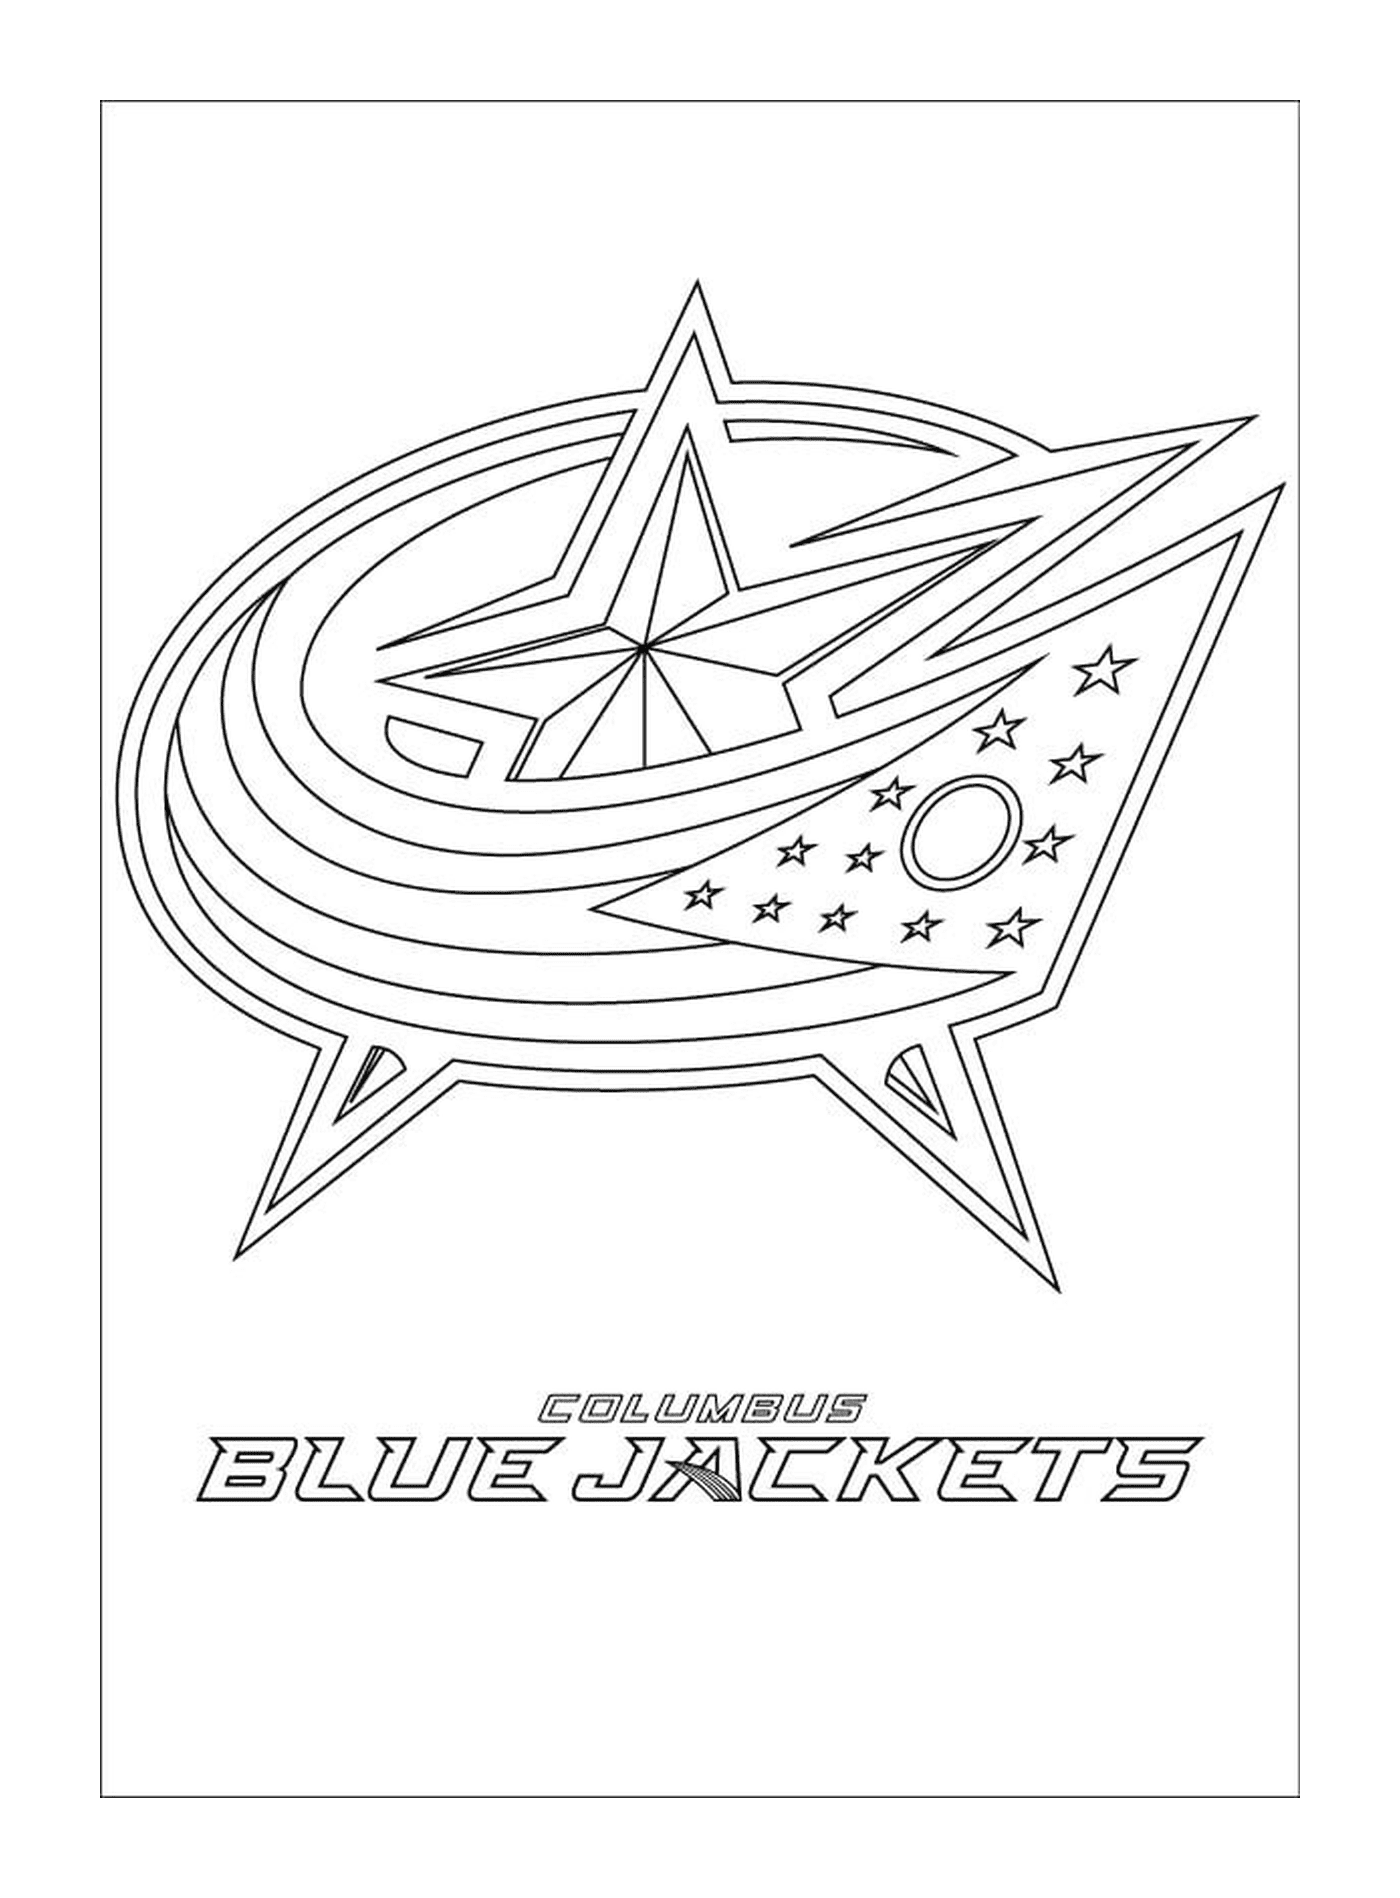  Columbus Blue Jackets logo 